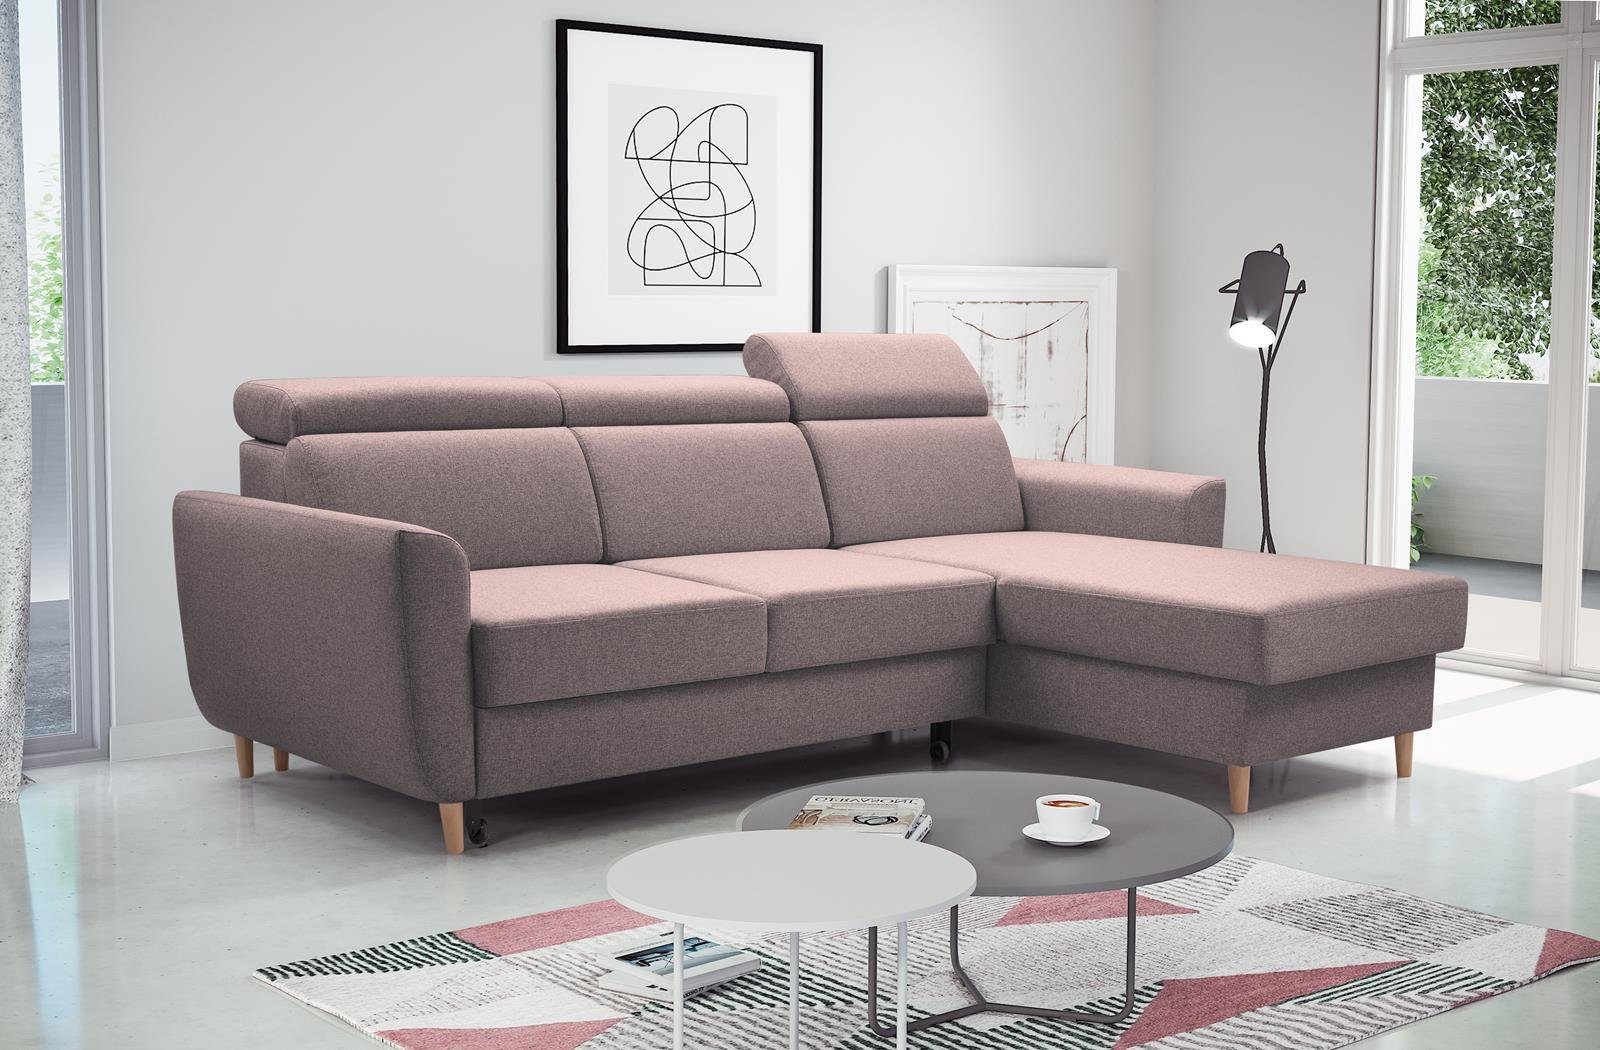 Beautysofa Ecksofa Modern Ecksofa GUSTAW Sofa Couch mit Schlaffunktion universelle cappucino